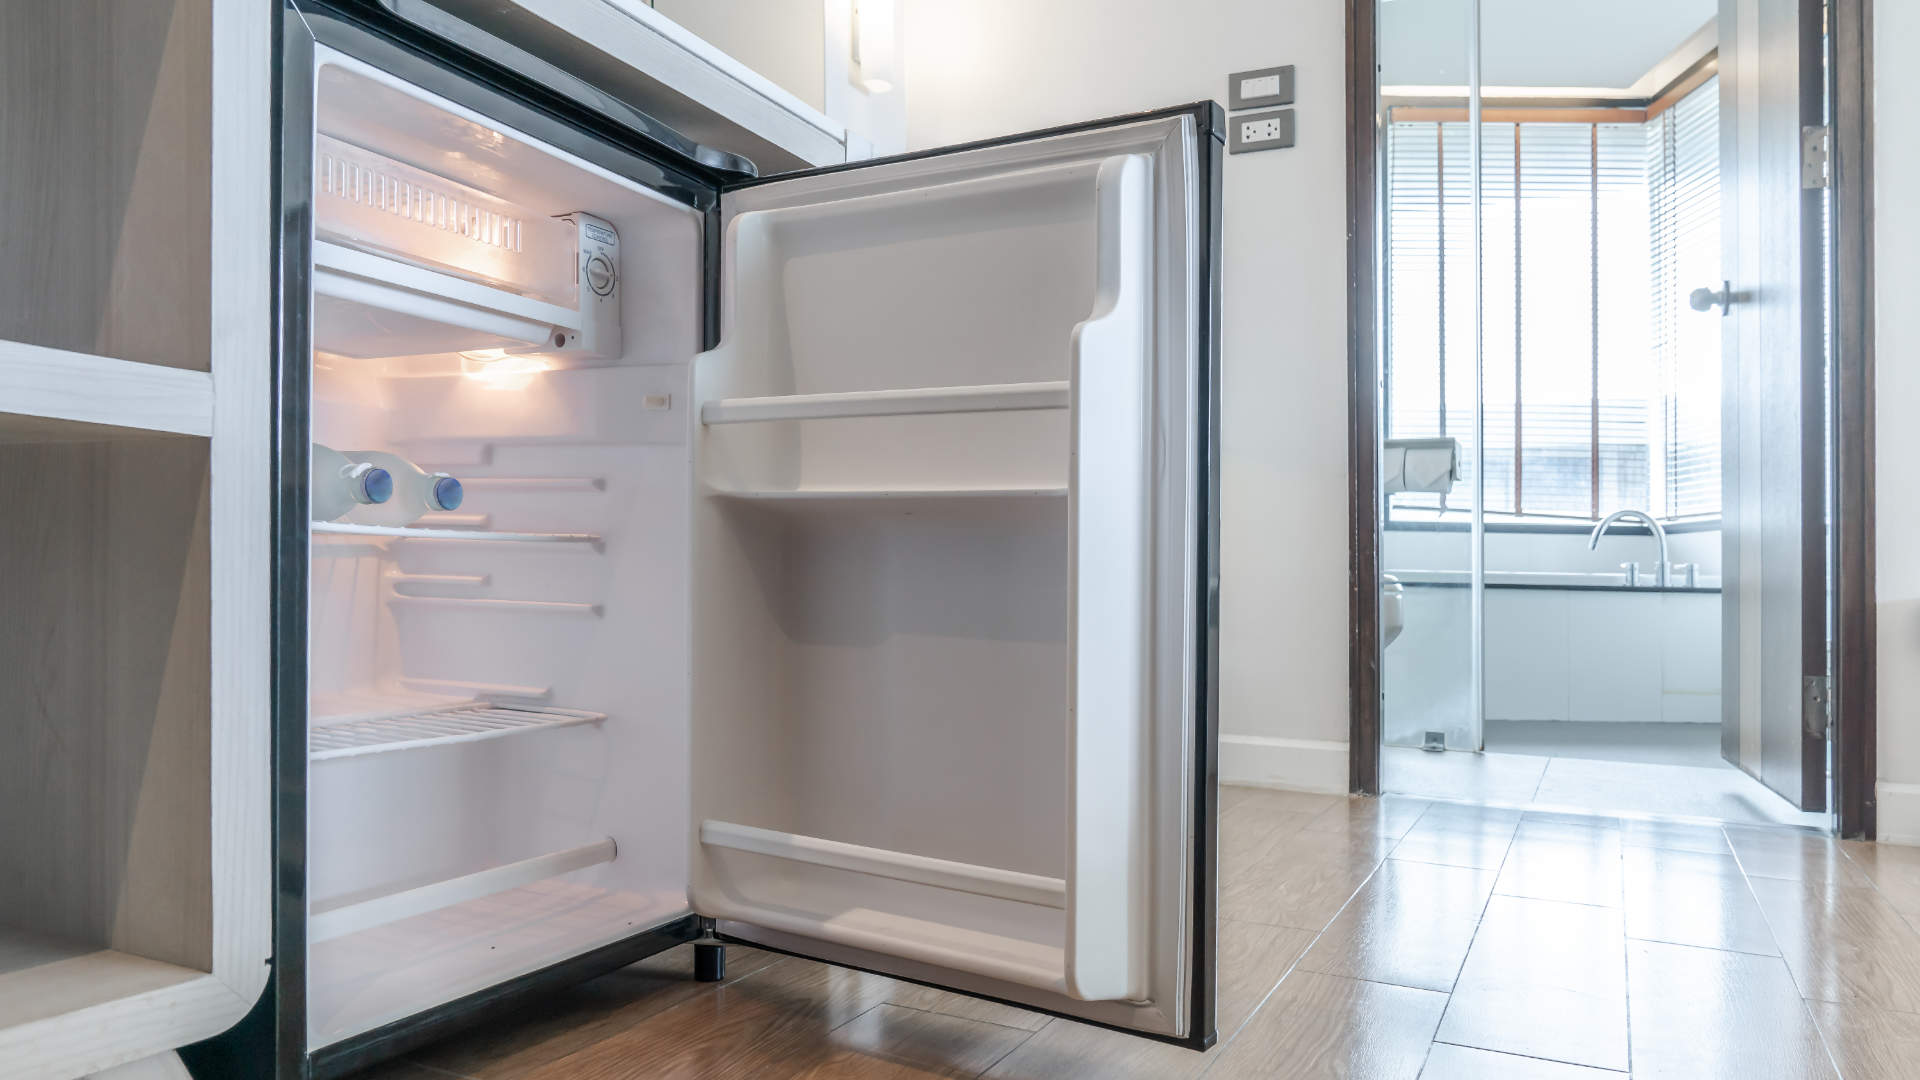 kitchen refrigerator against wall